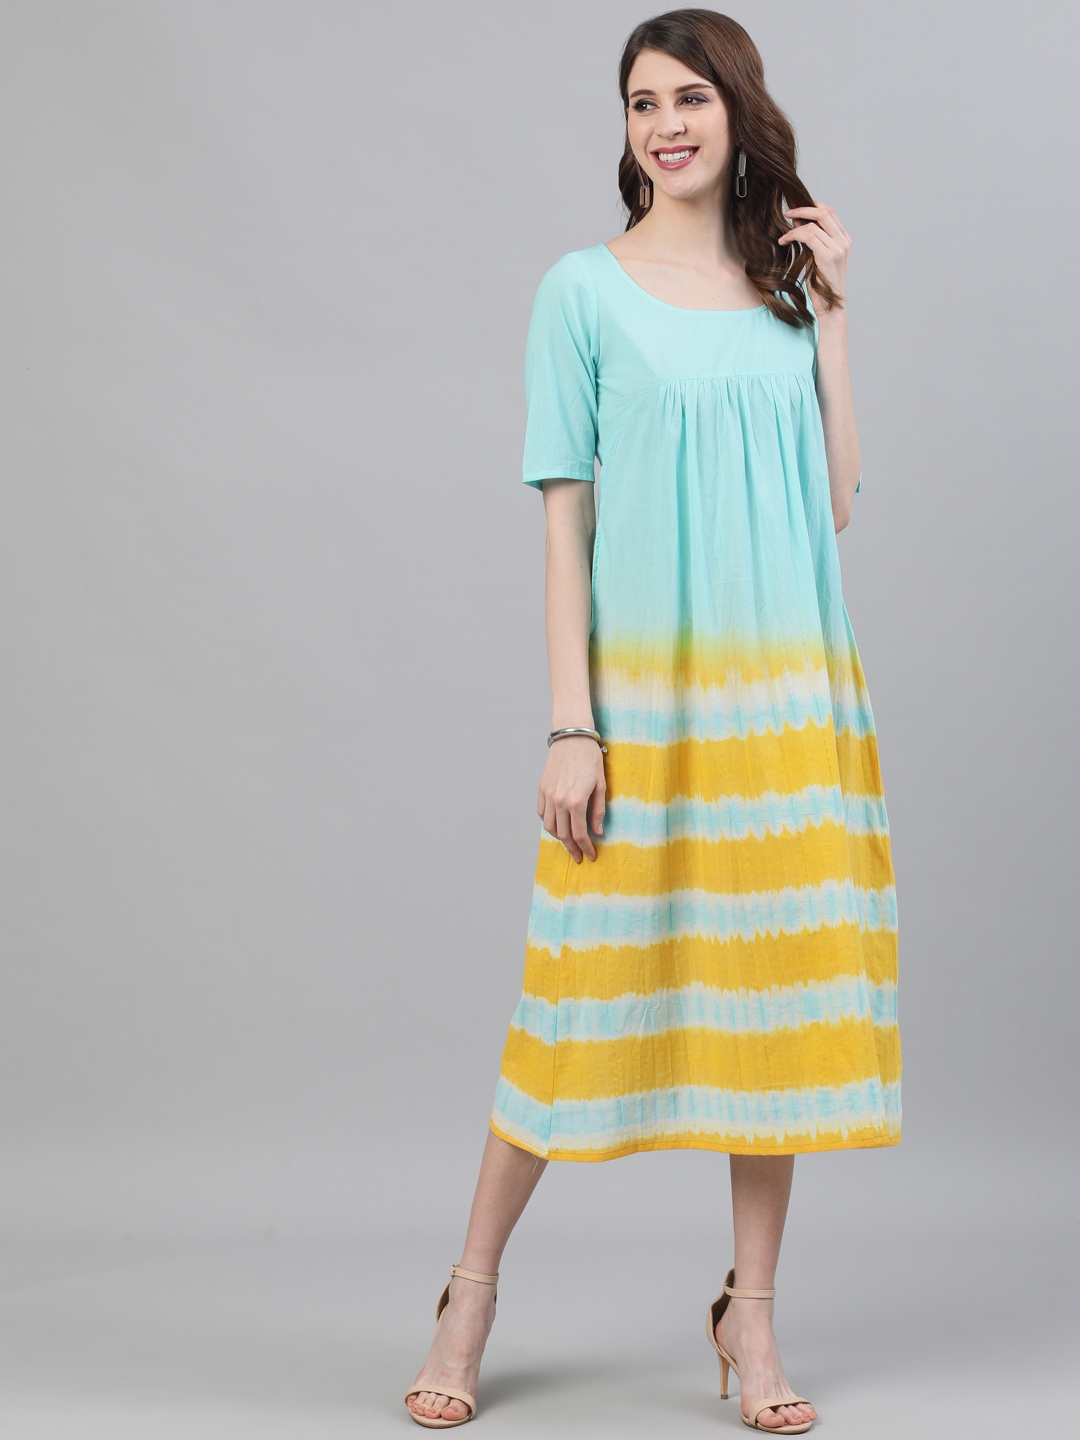 ANTARAN | Blue & Yellow Tie and Dye A-Line Dress